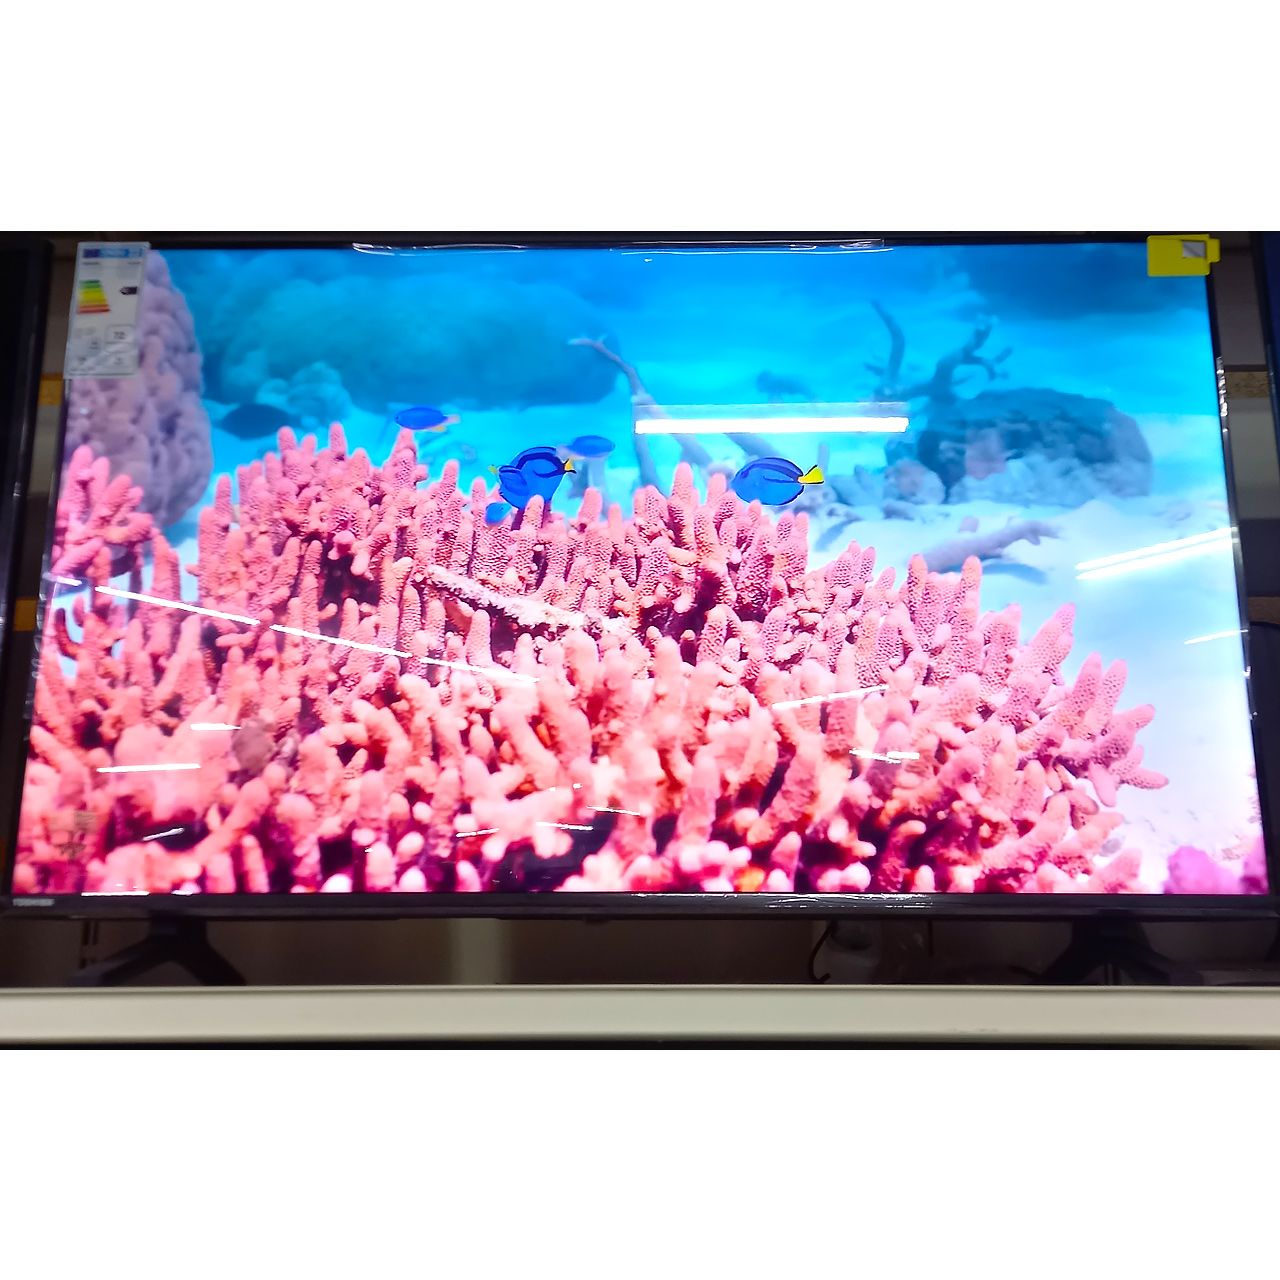 Телевизор Toshiba FullHD 110 см